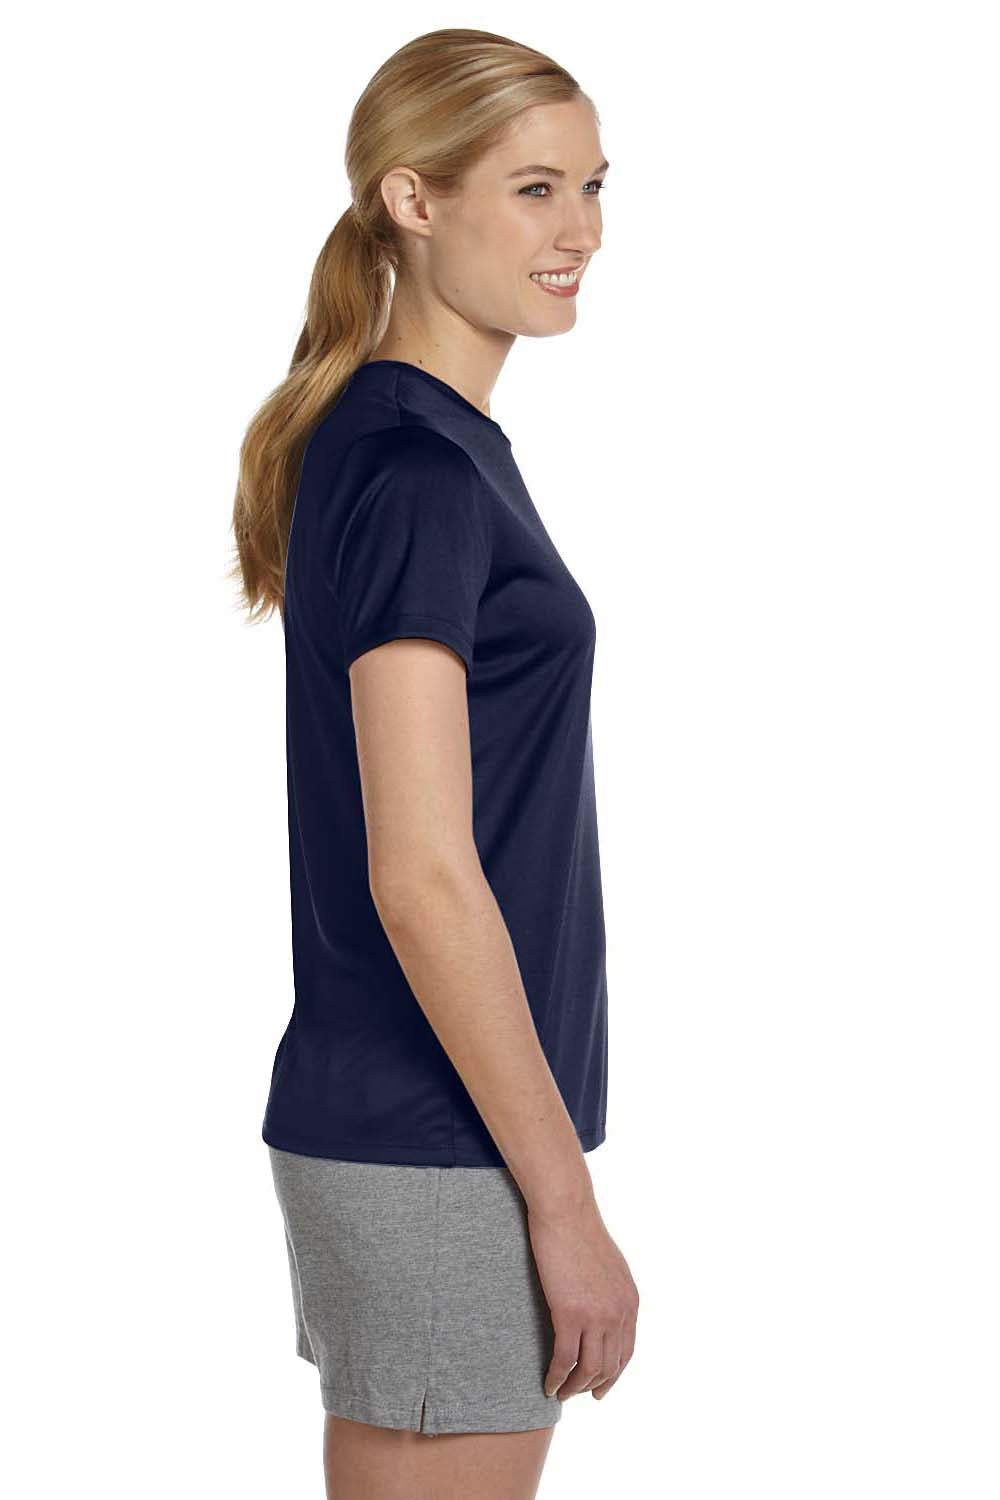 Hanes 4830 Womens Cool DRI FreshIQ Moisture Wicking Short Sleeve Crewneck T-Shirt Navy Blue Side